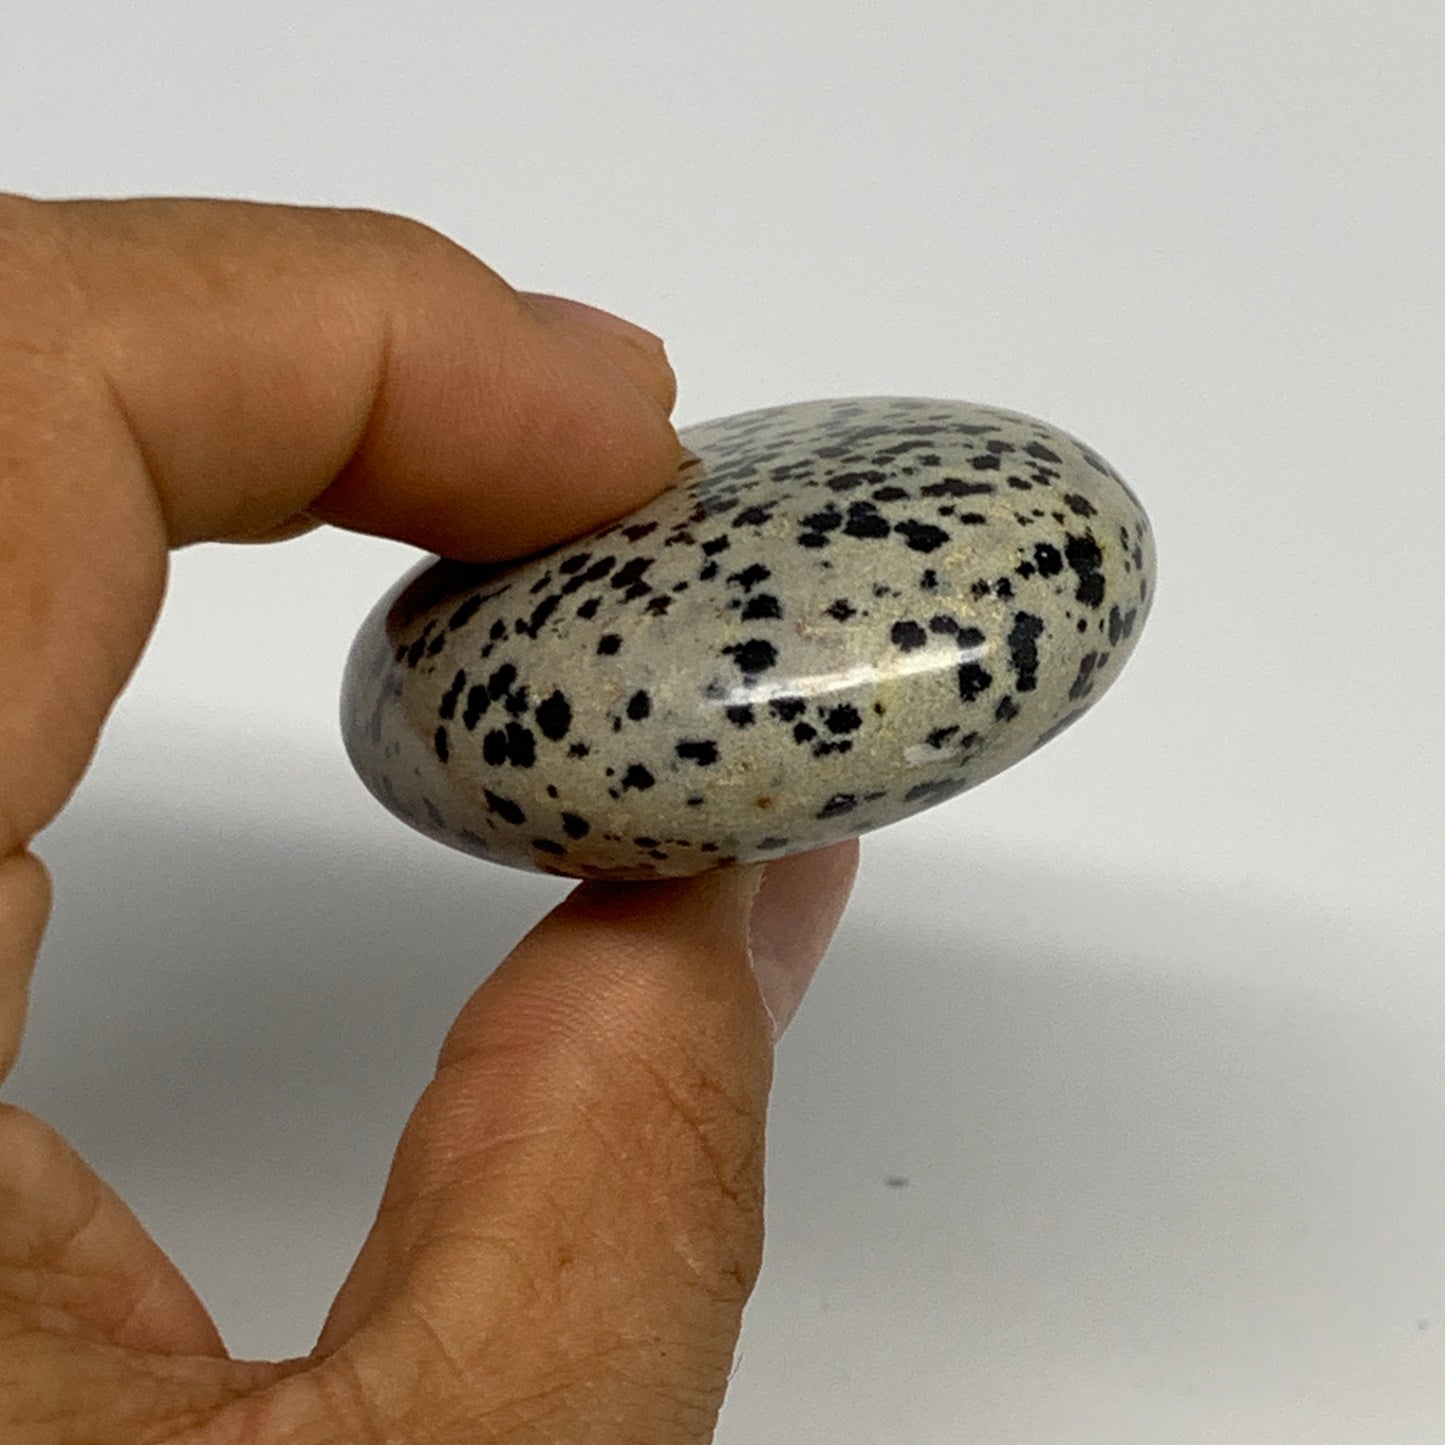 75.8g, 2.2"x1.7"x0.8", Natural Dalmatian Jasper Palm-Stone @India, B29468